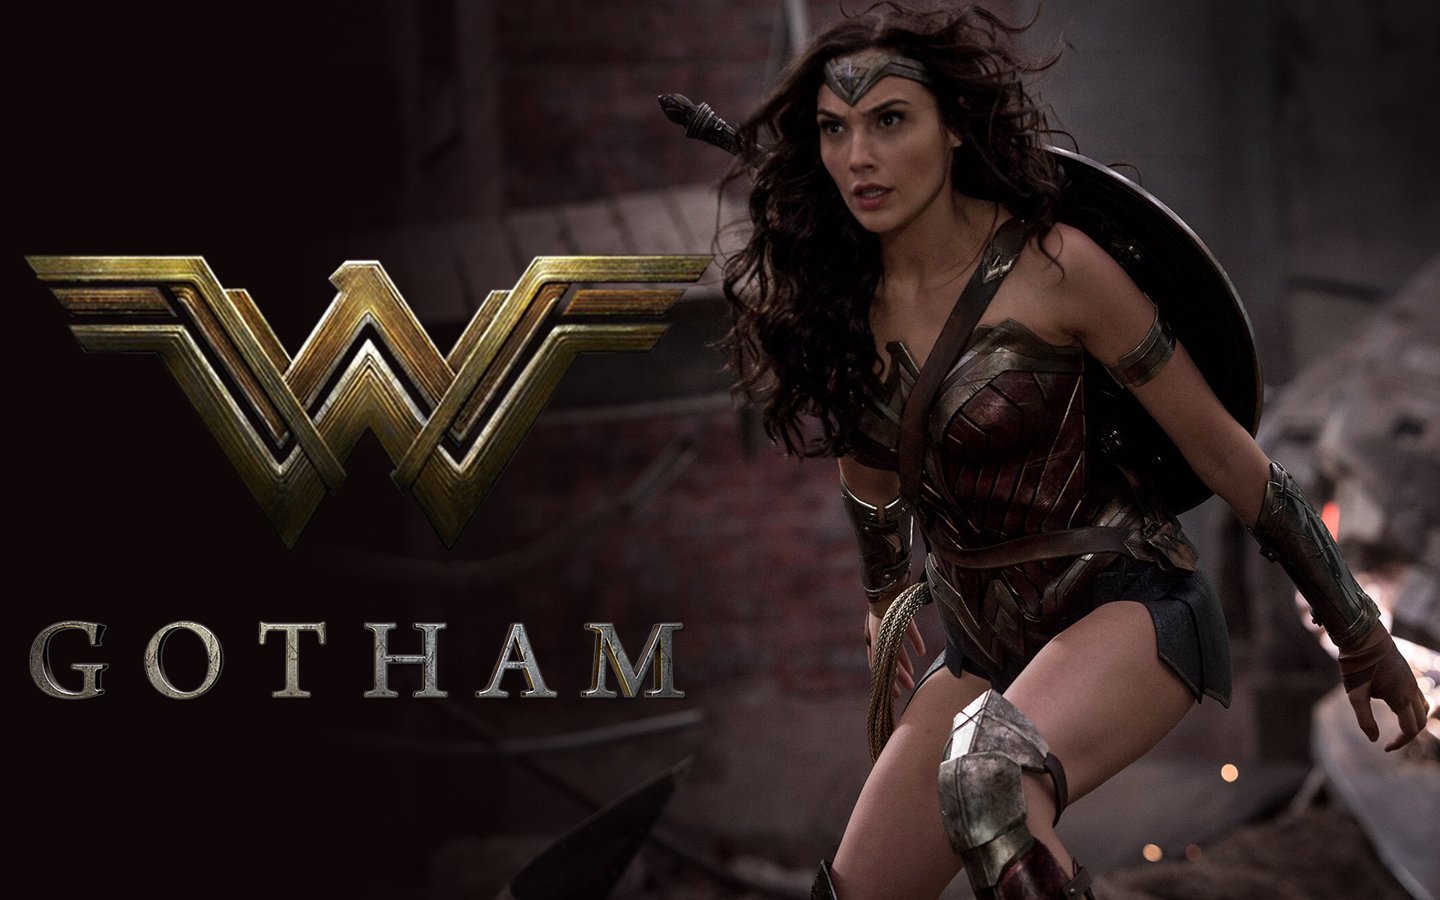 Wonder Woman Sneak Peek Being Aired During Tonight’s Episode of ‘Gotham’